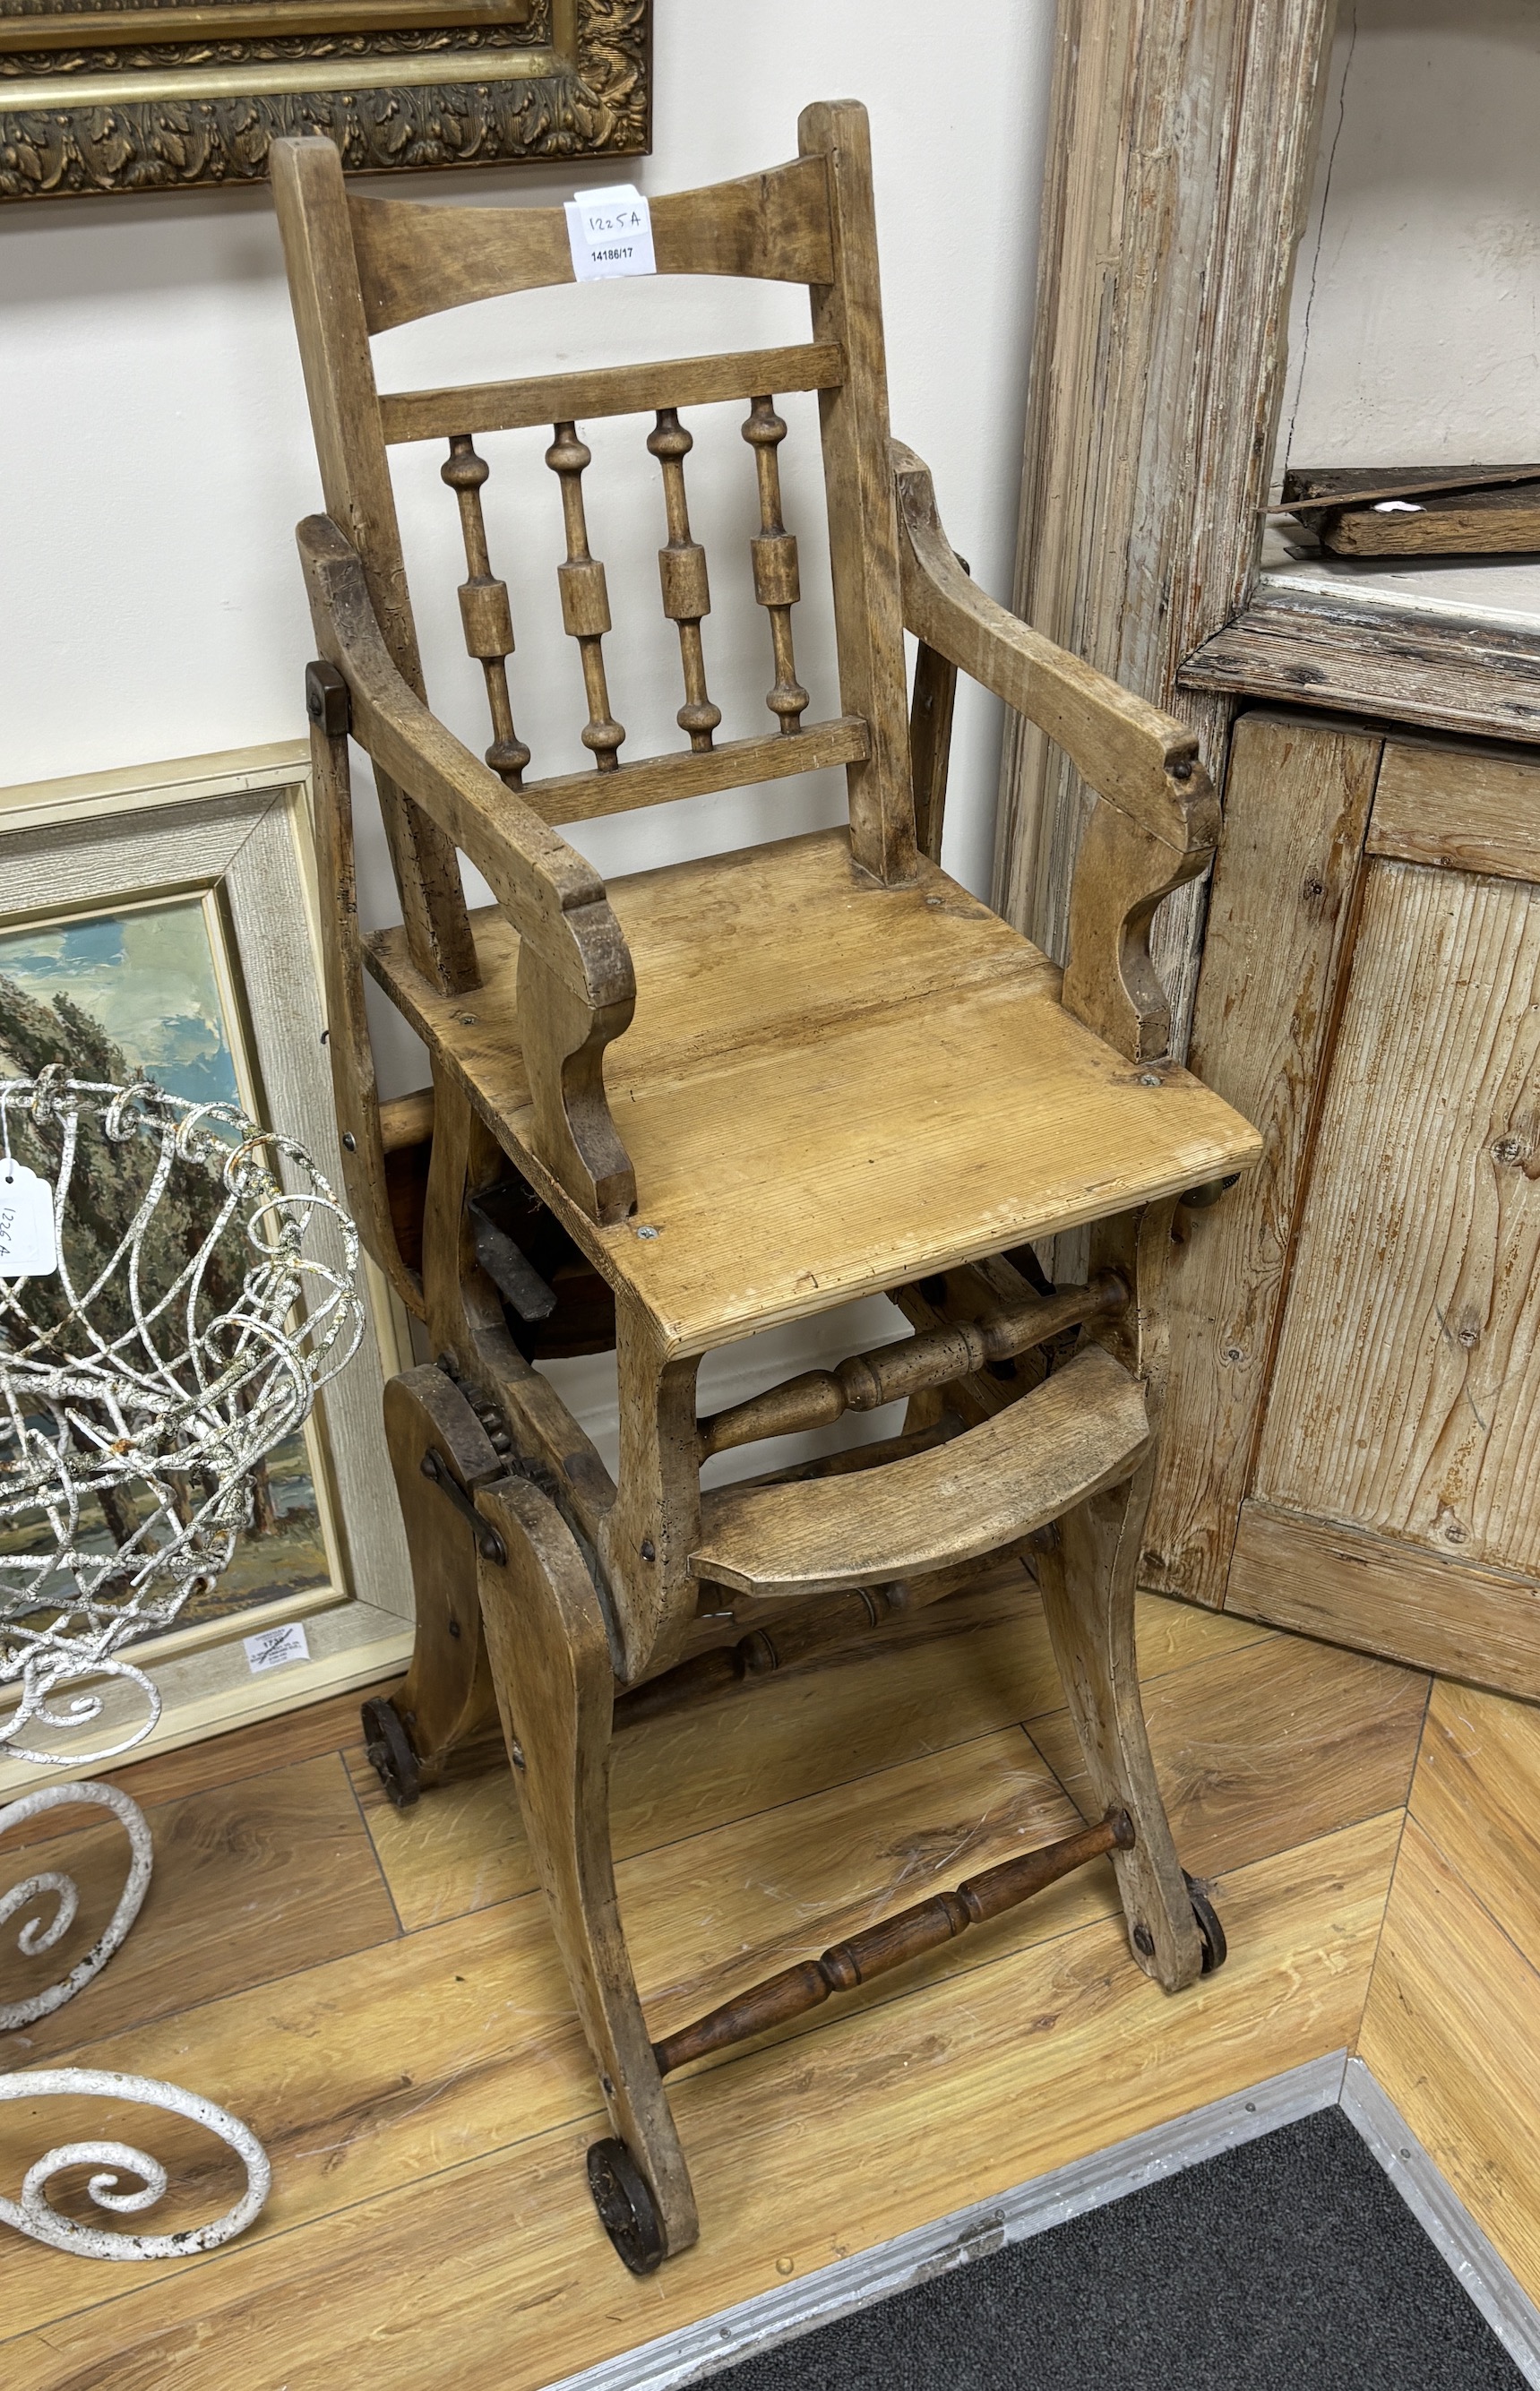 A Victorian beech metamorphic child's high chair